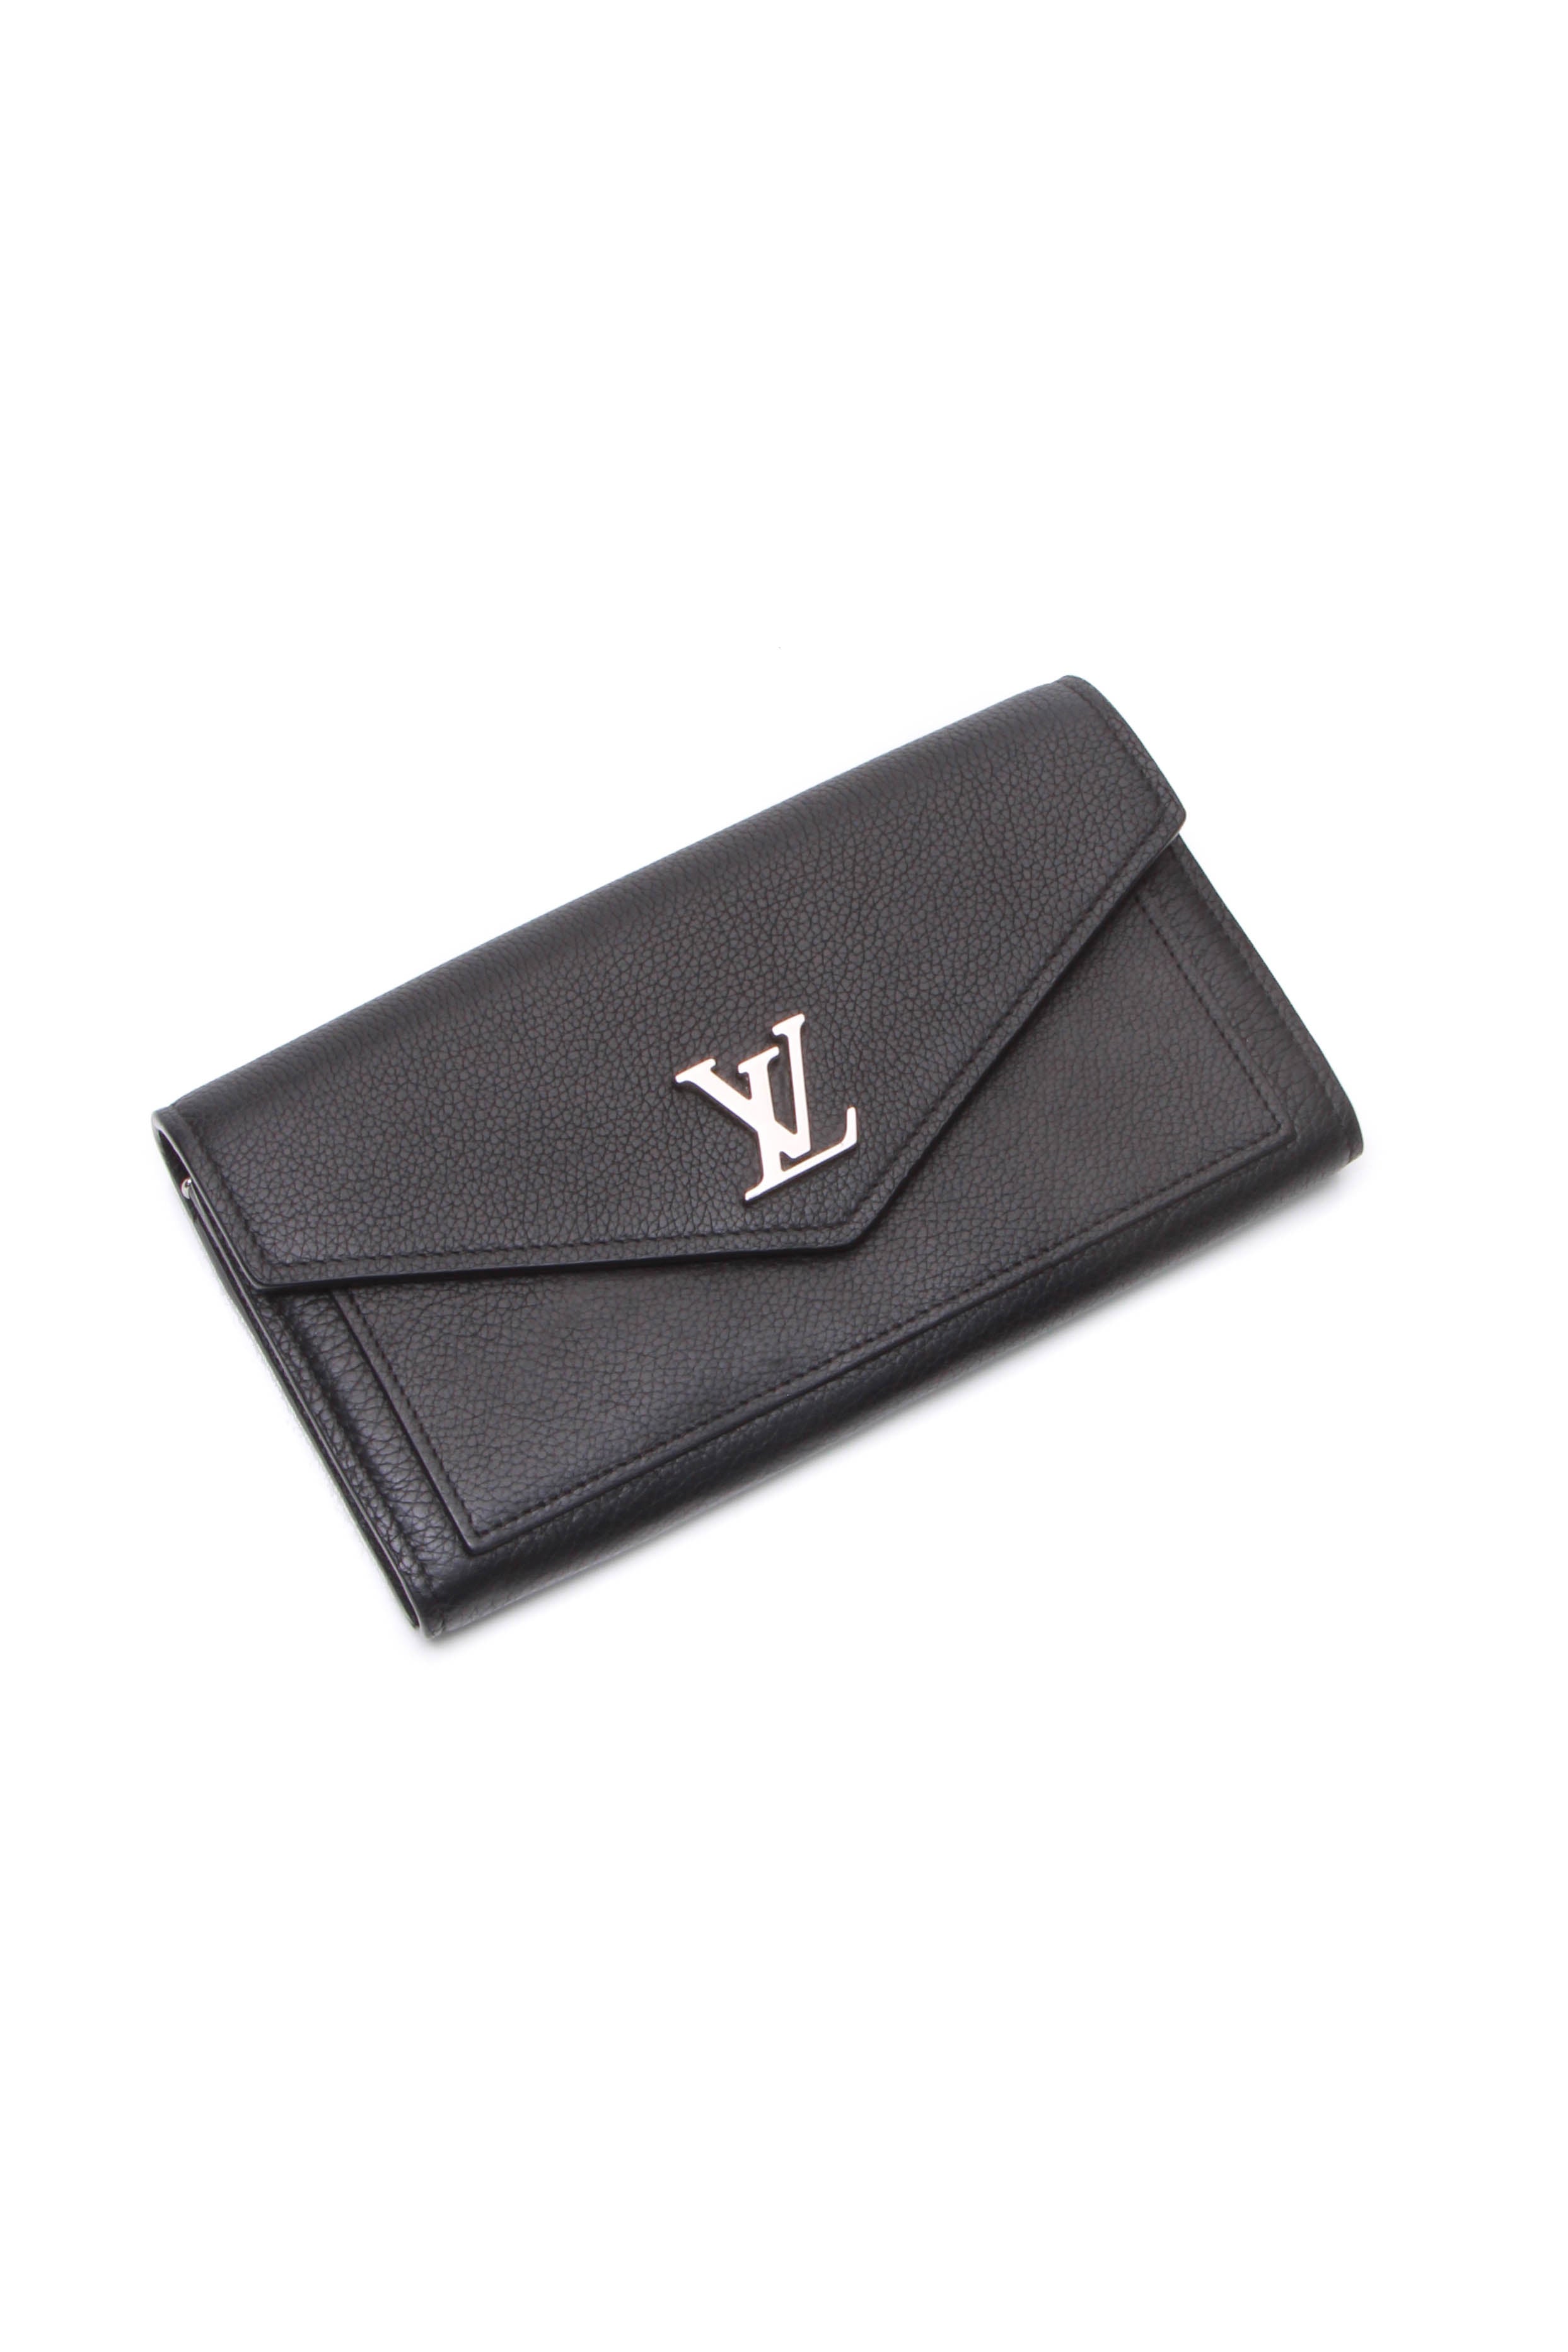 LOUIS VUITTON Lockme II Calfskin Leather Wallet Review